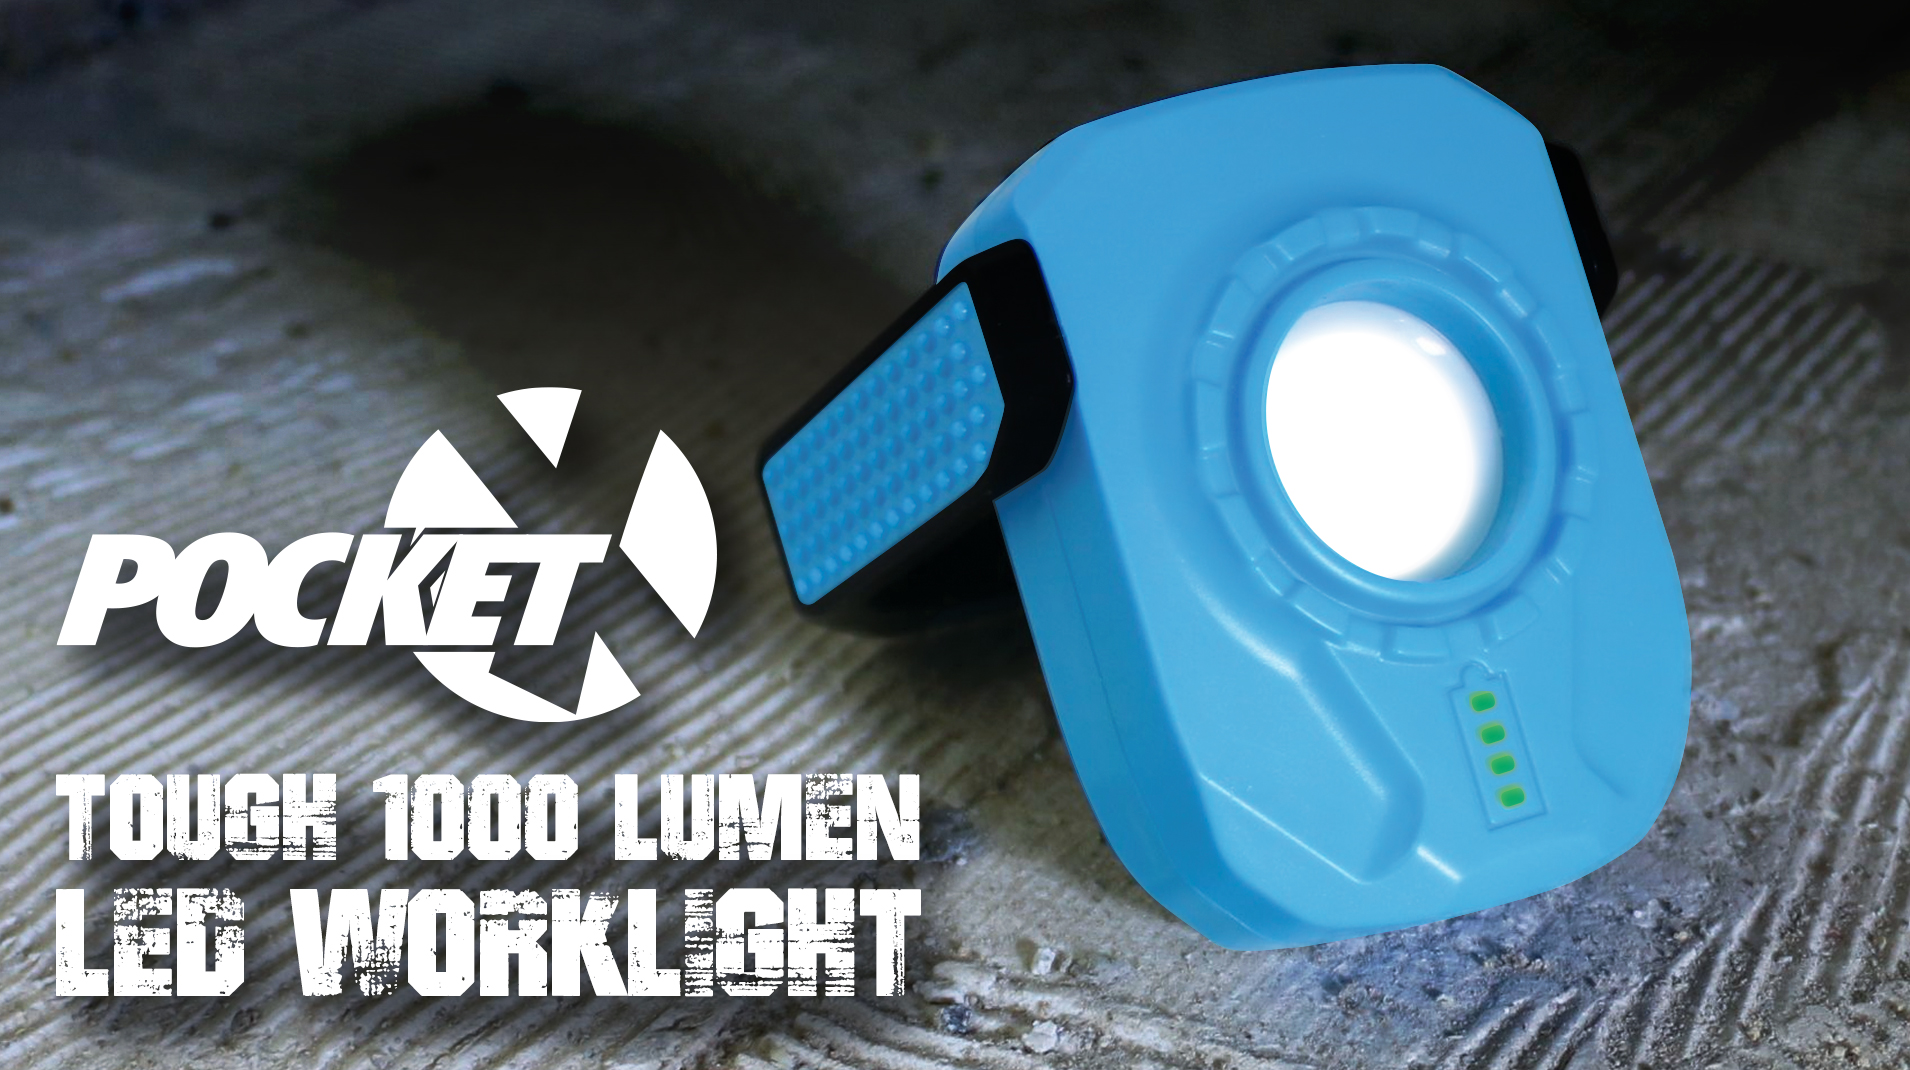 TradeTuff PocketX - Tough 1000 Lumen LED Worklight